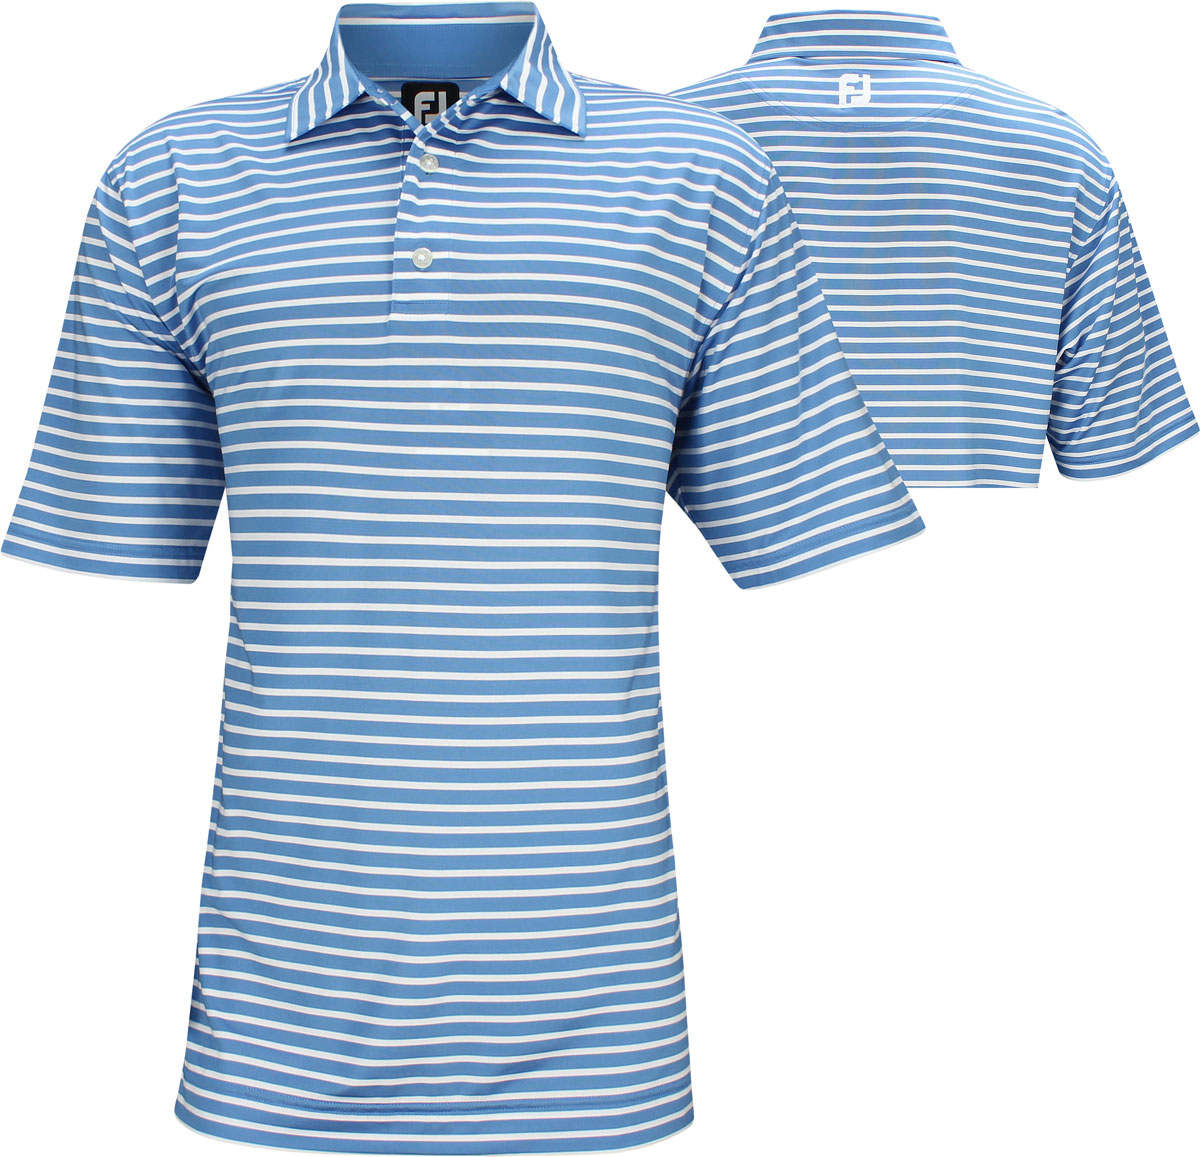 FootJoy ProDry Performance Lisle 2-Color Stripe Golf Shirts